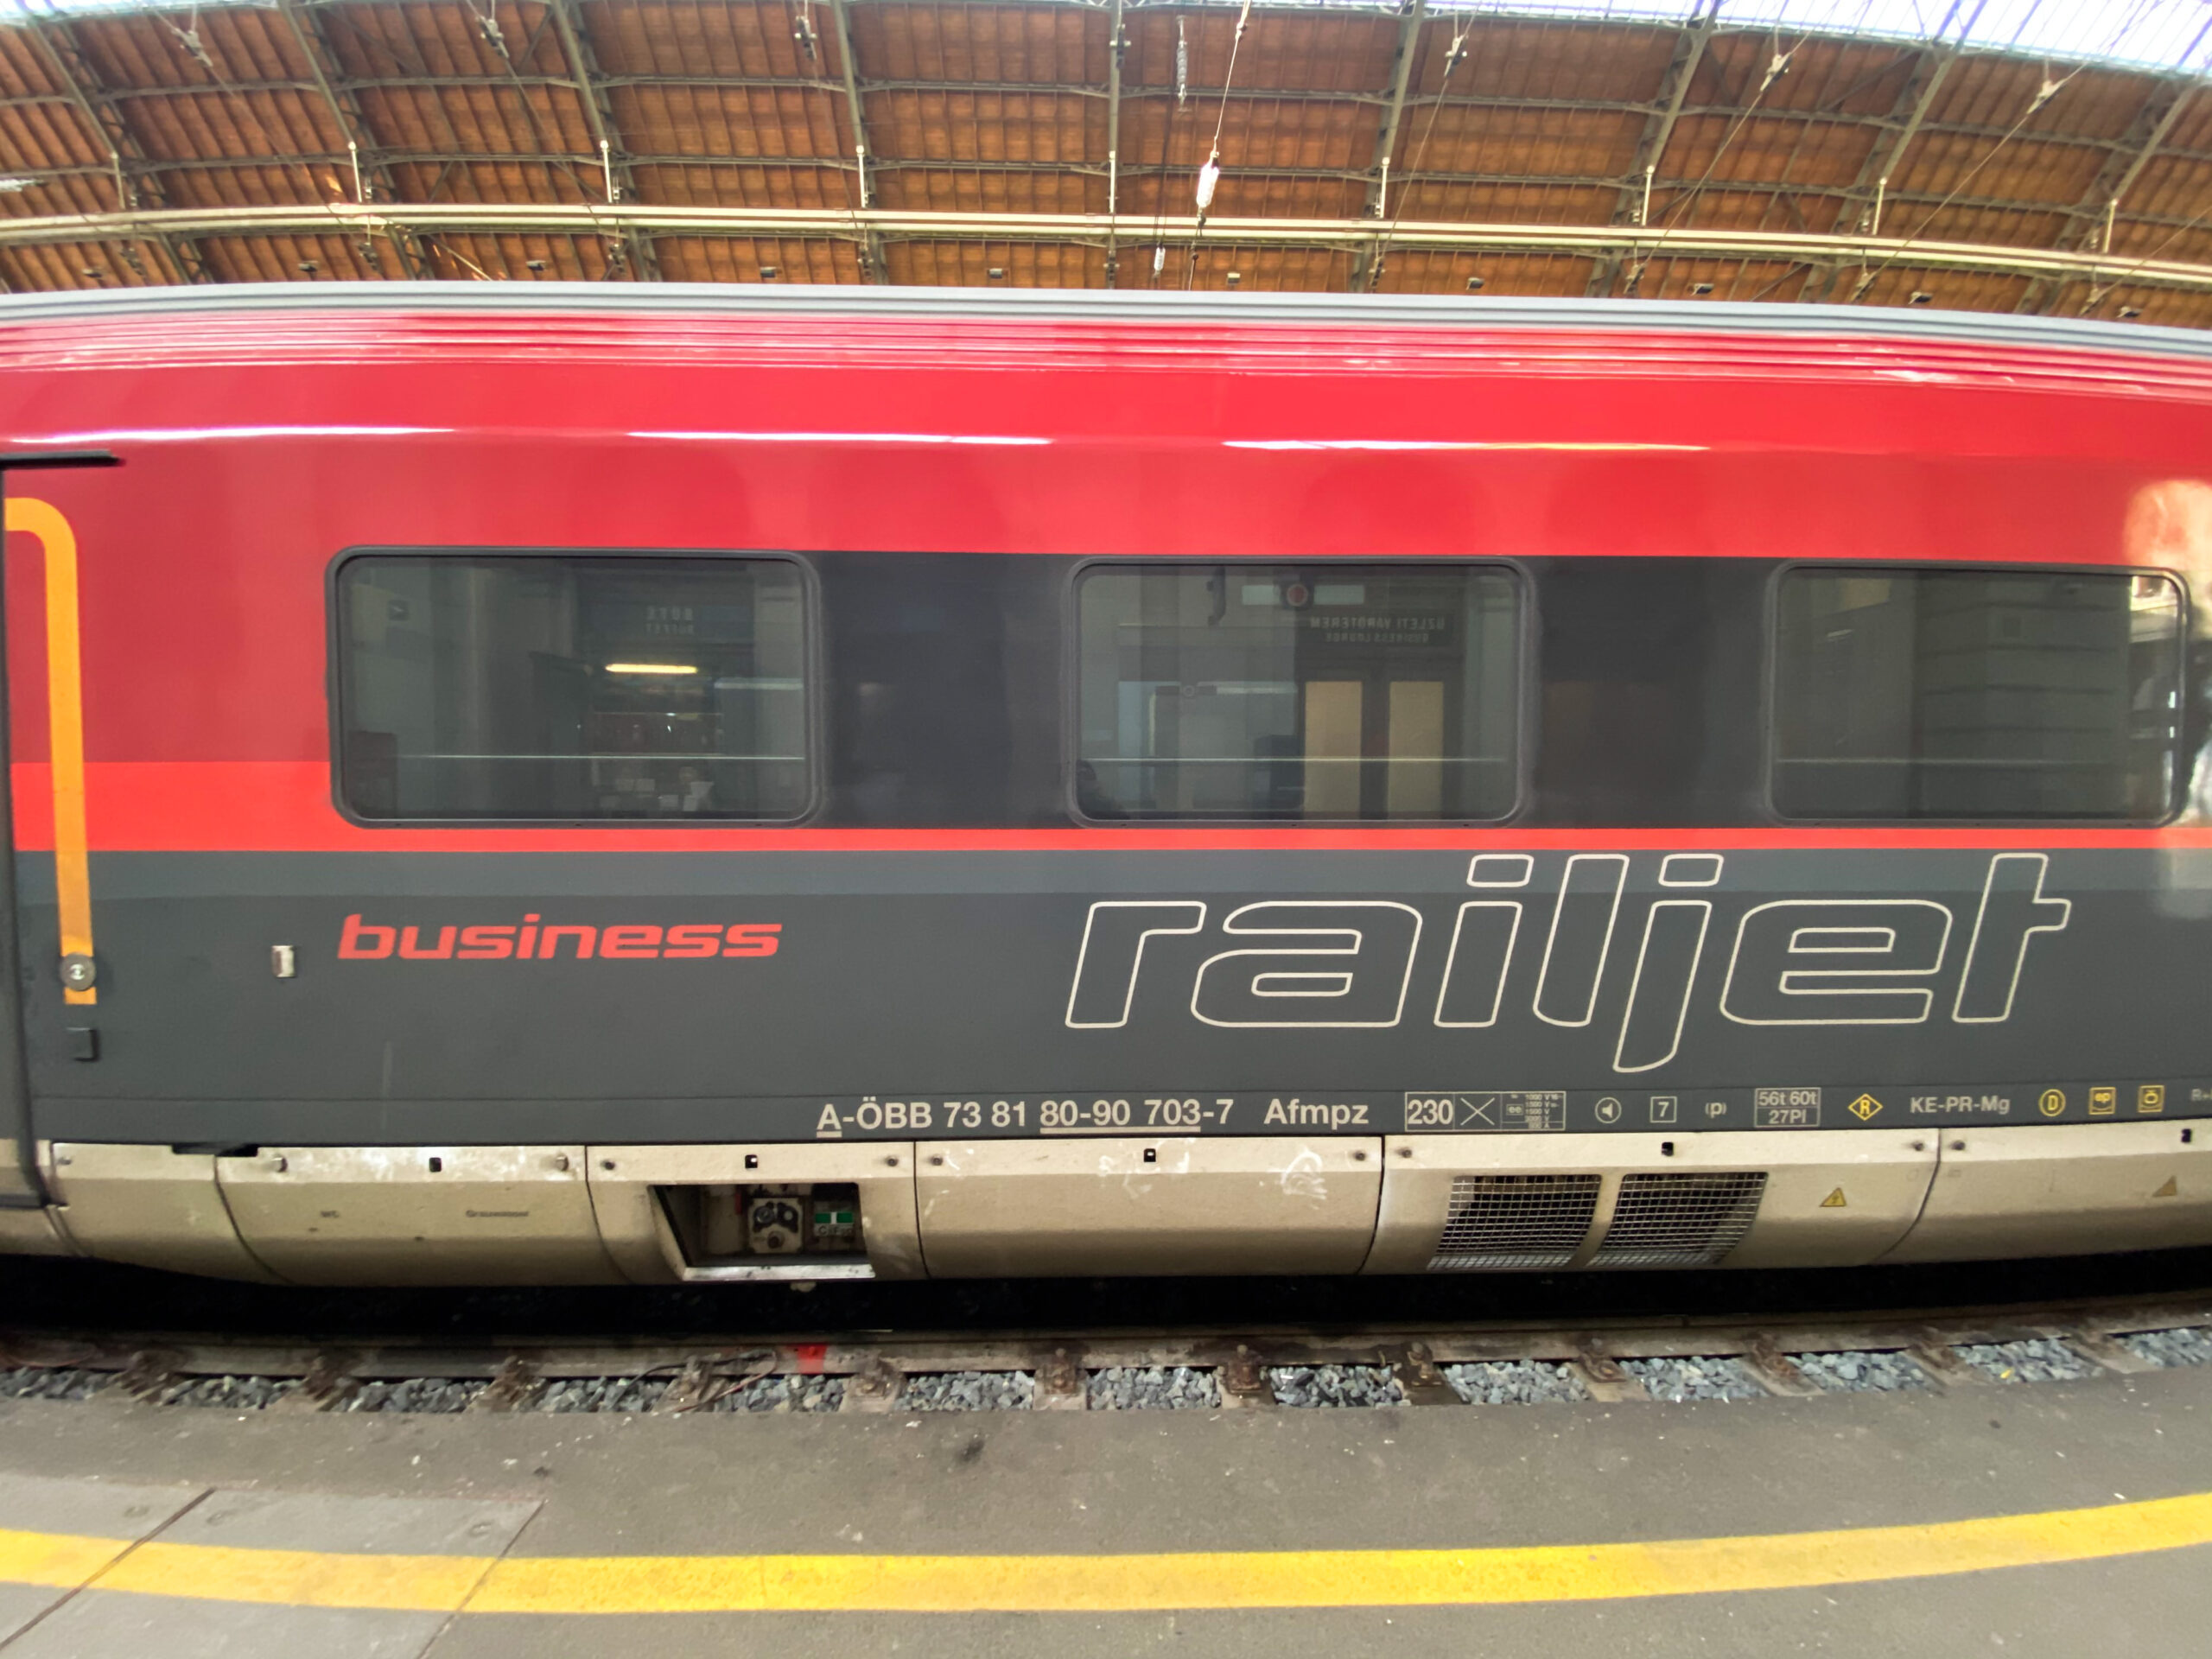 Exterior of a RailJet train heading to Vienna